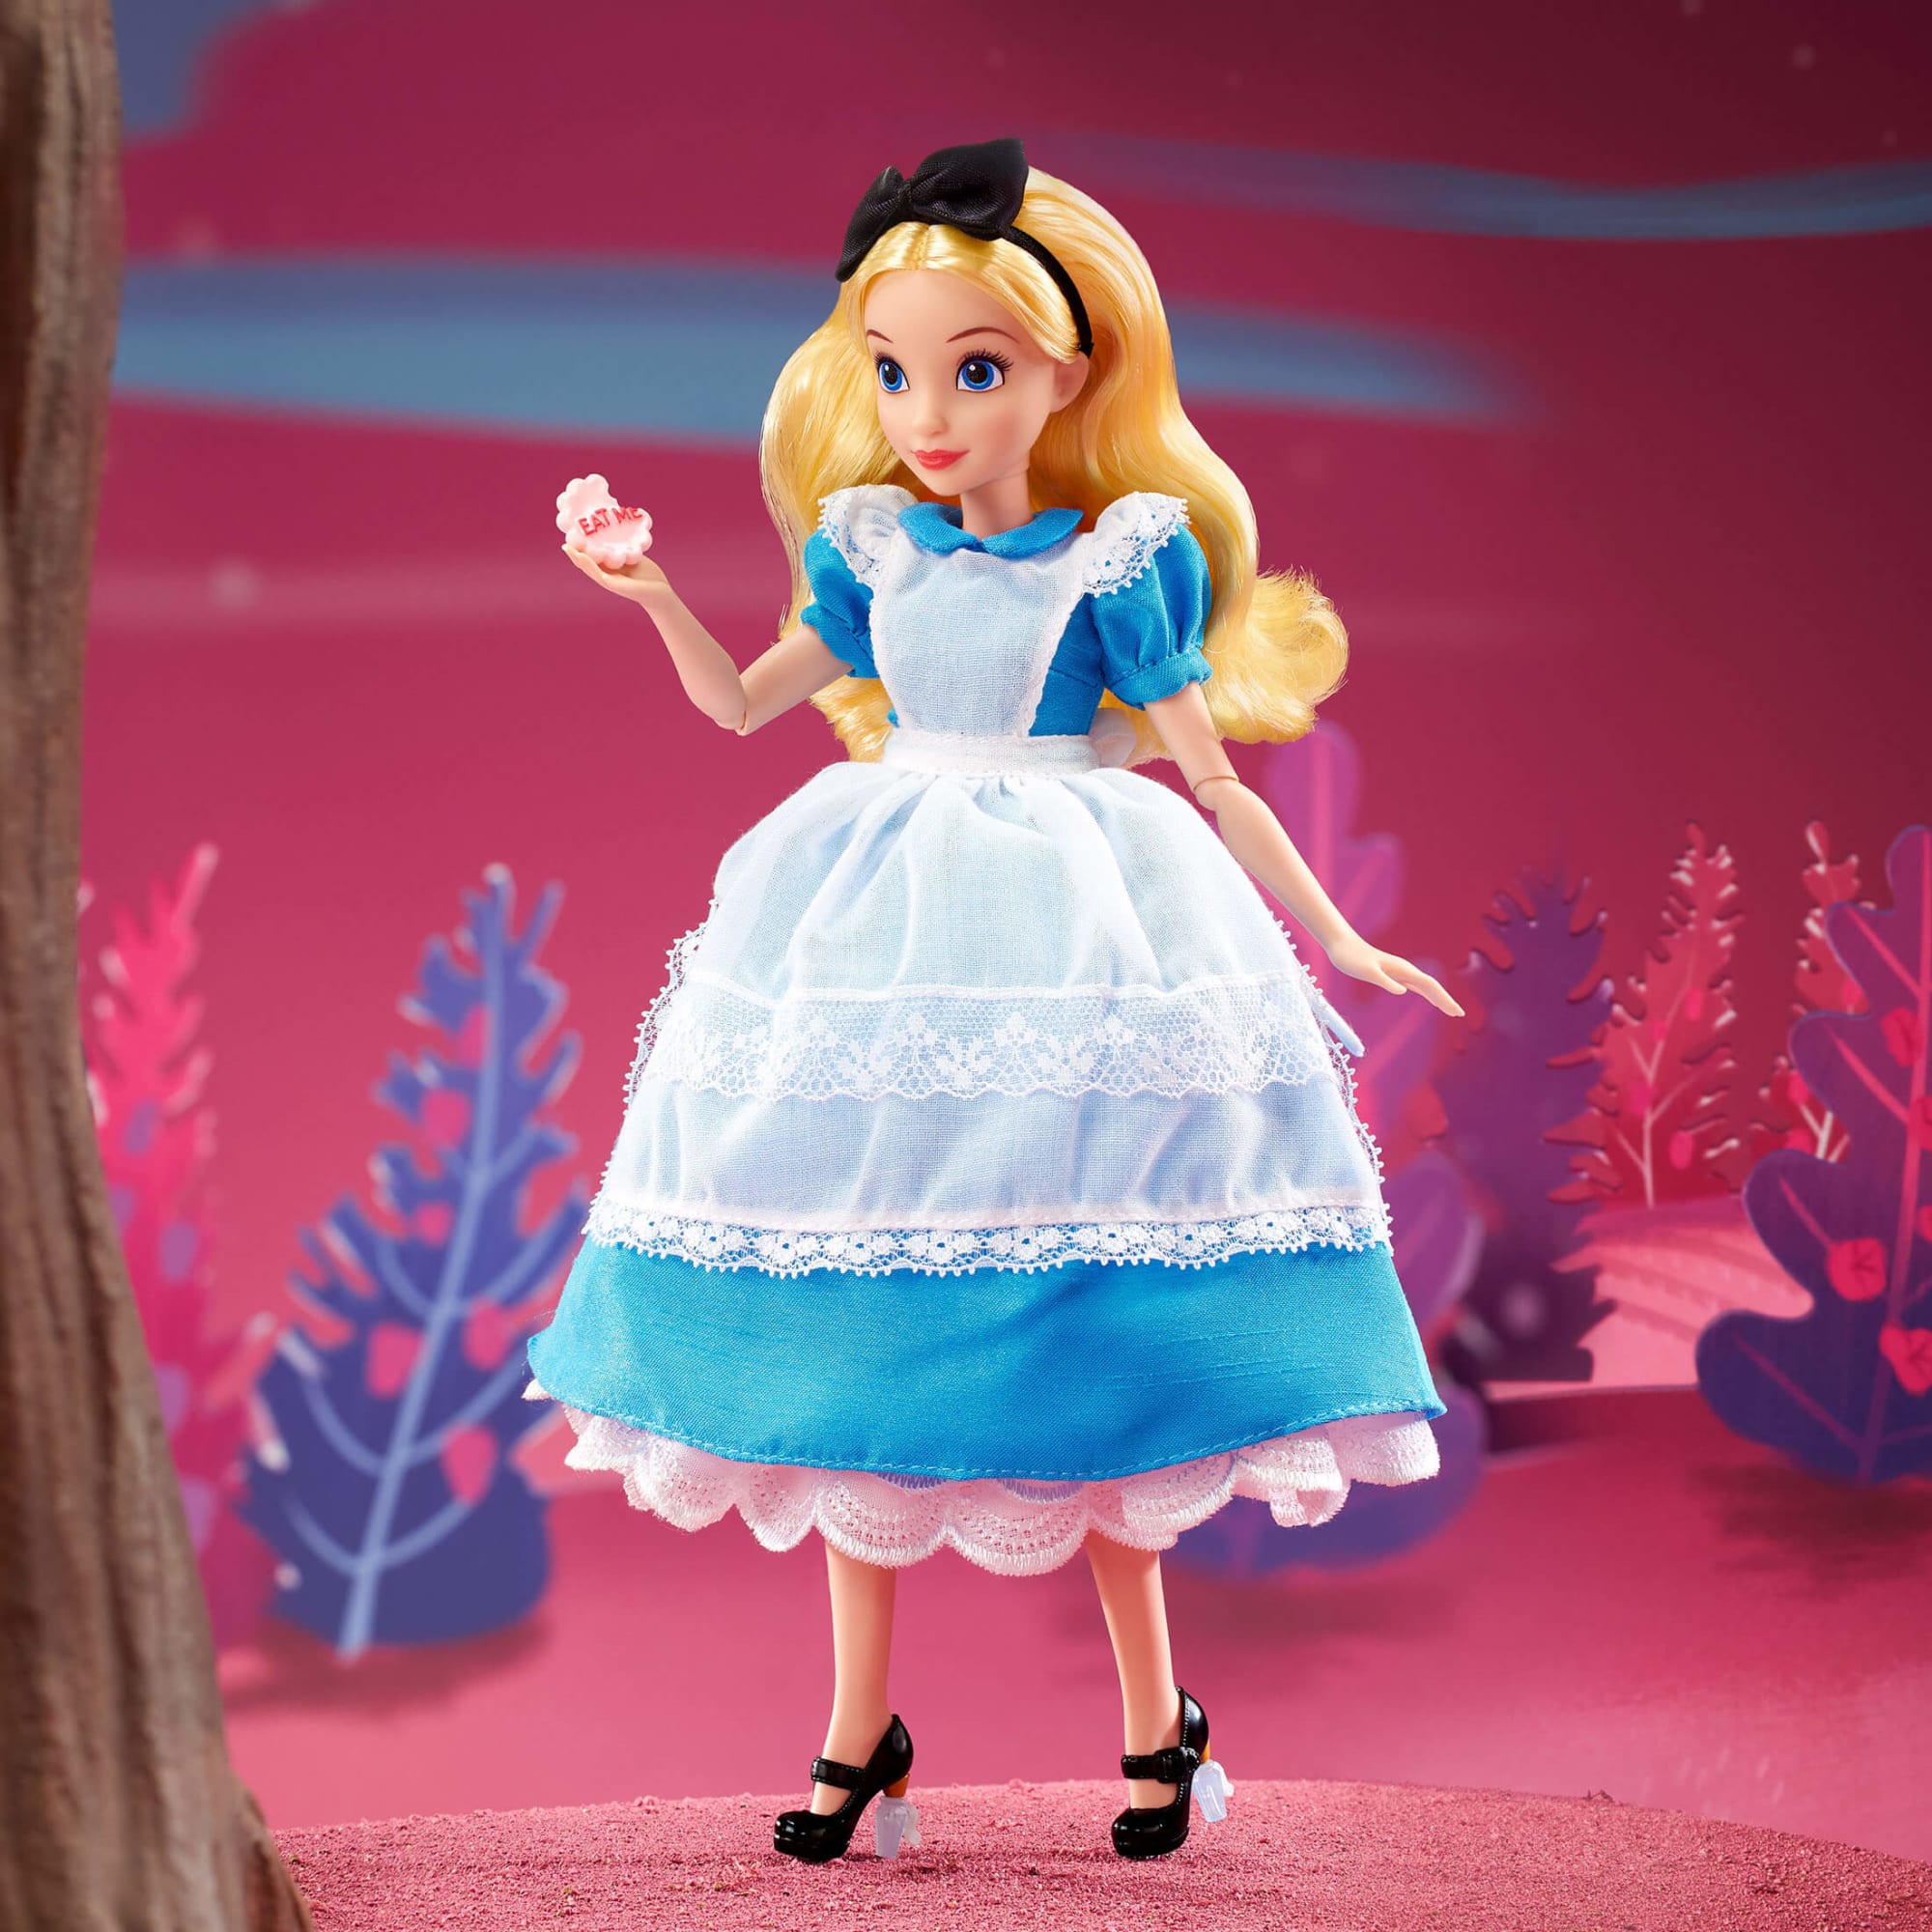 Disney Collector Alice in Wonderland Doll